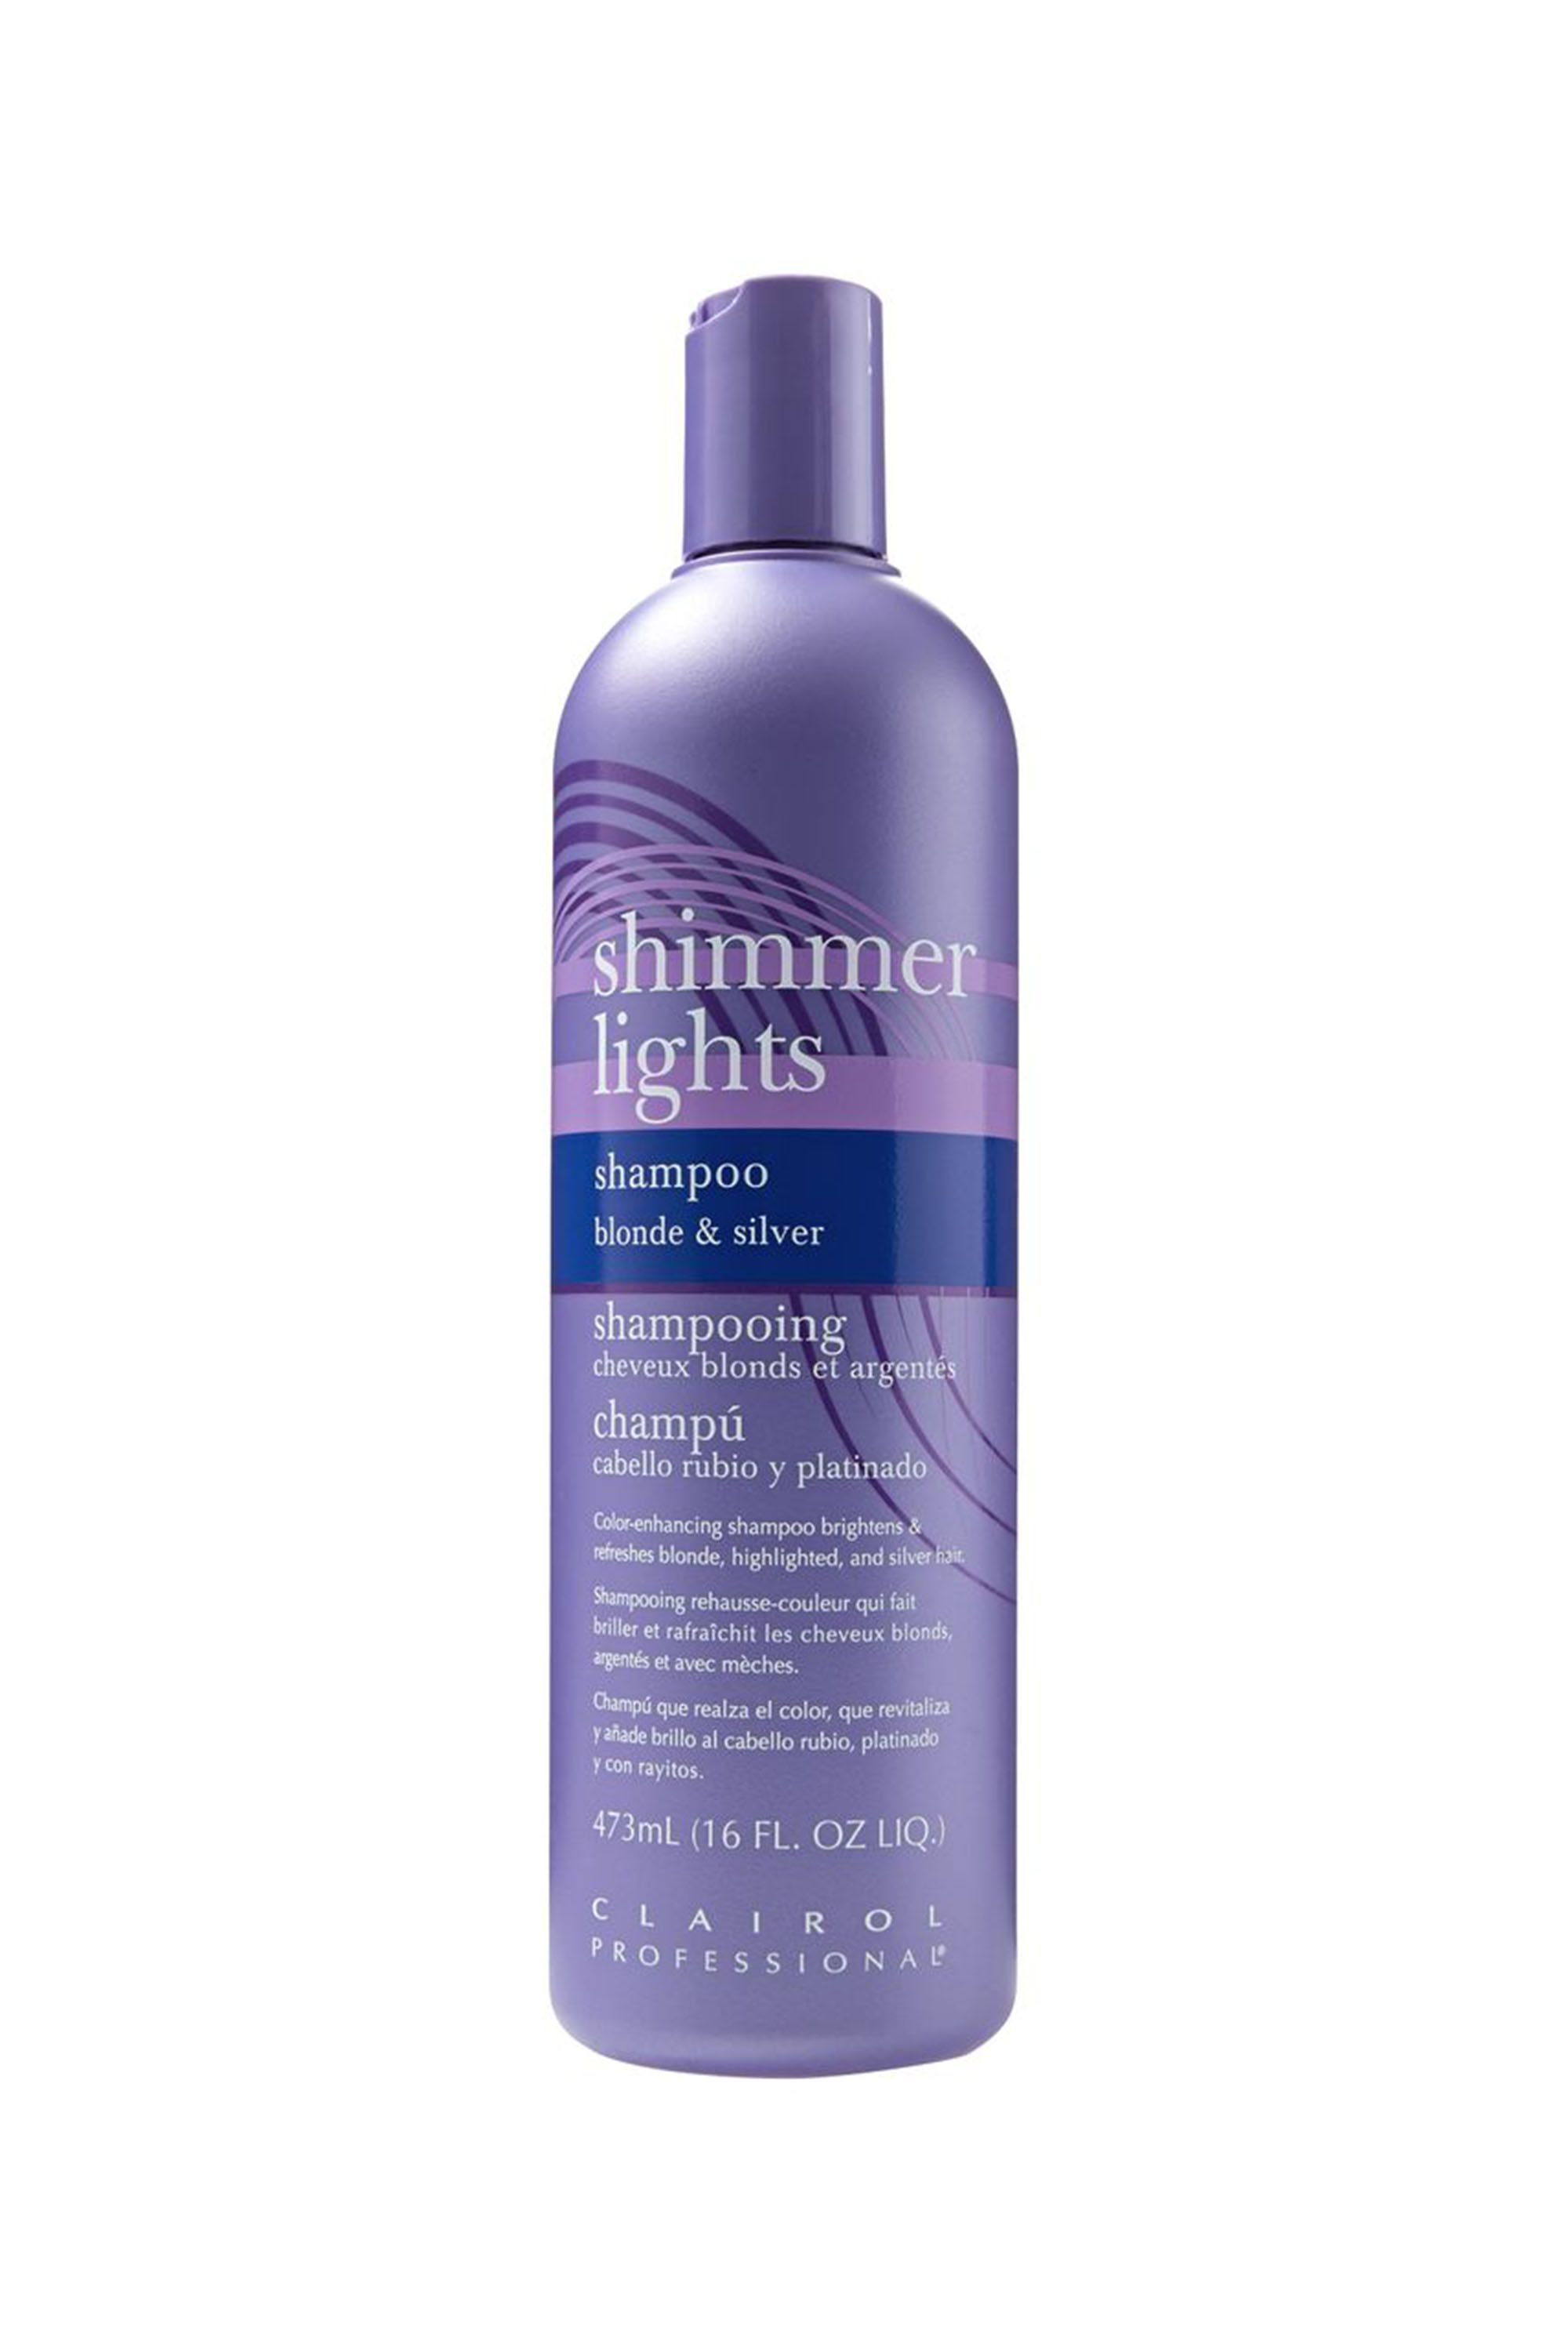 Best Purple Shampoos in 2020 - Hailey Baldwin's Colorist Lists The Best  Purple Shampoos